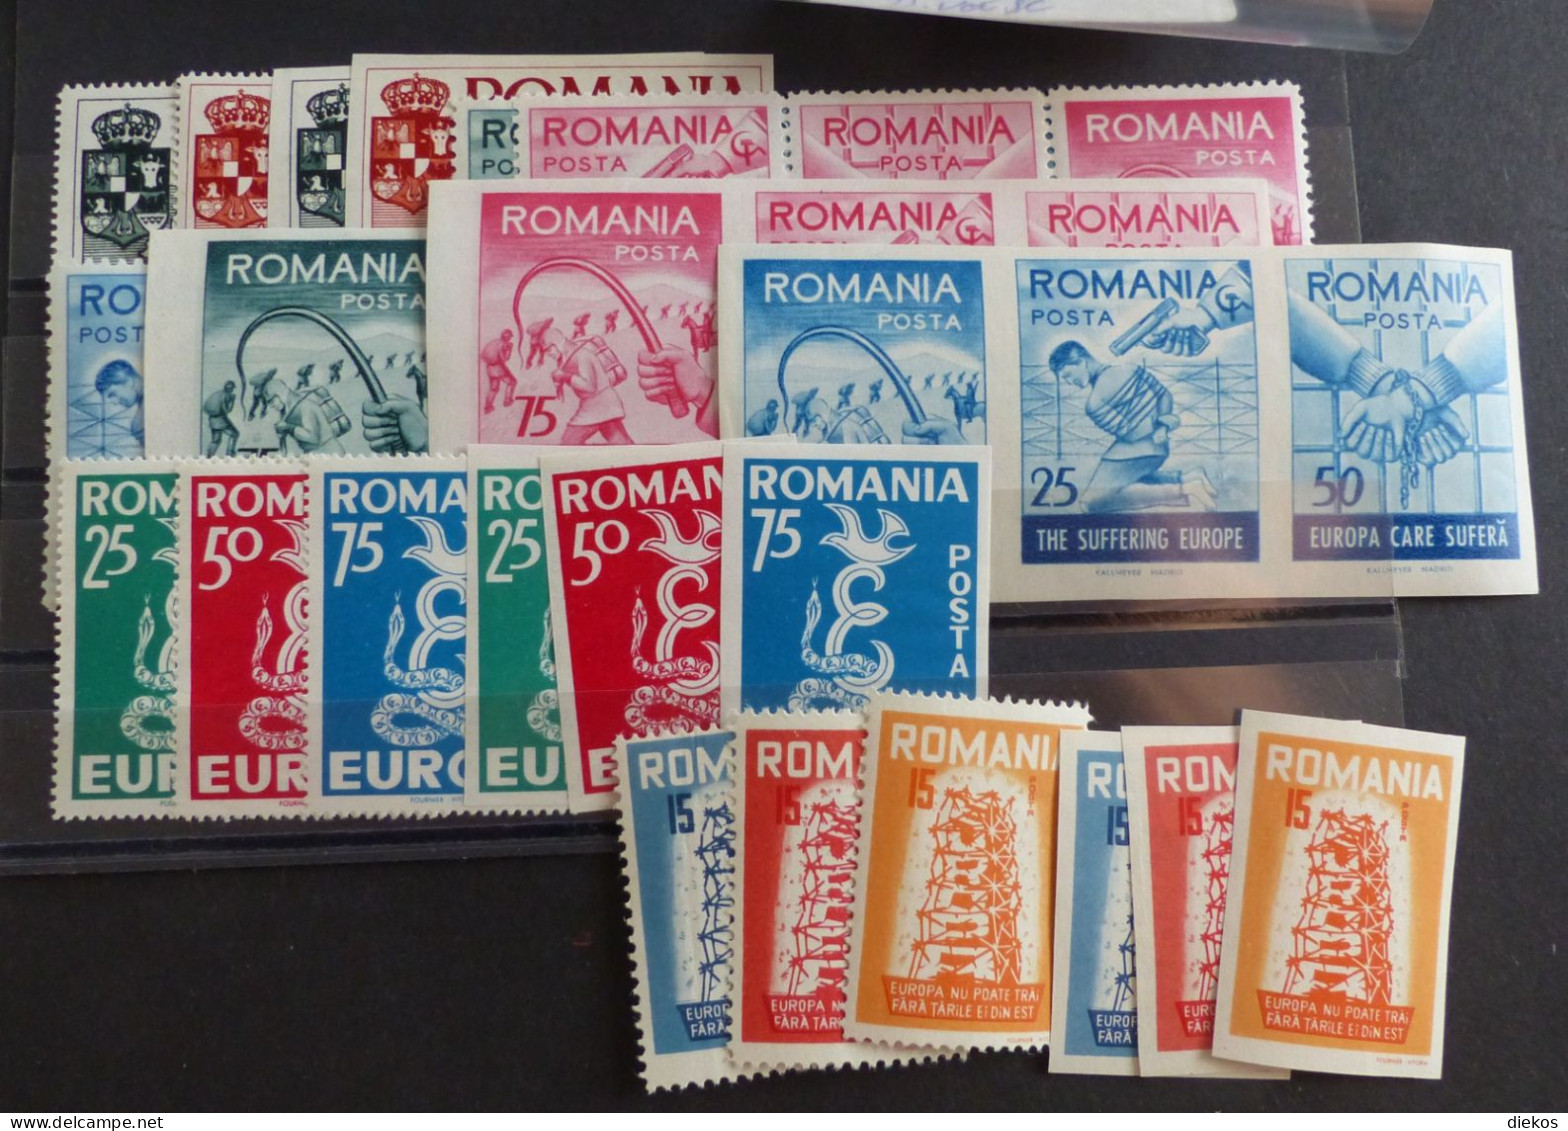 Rumänien 1957  Romana Vignetten Der Gegenregierung  MNH ** Postfrisch       #6242 - Lokale Uitgaven